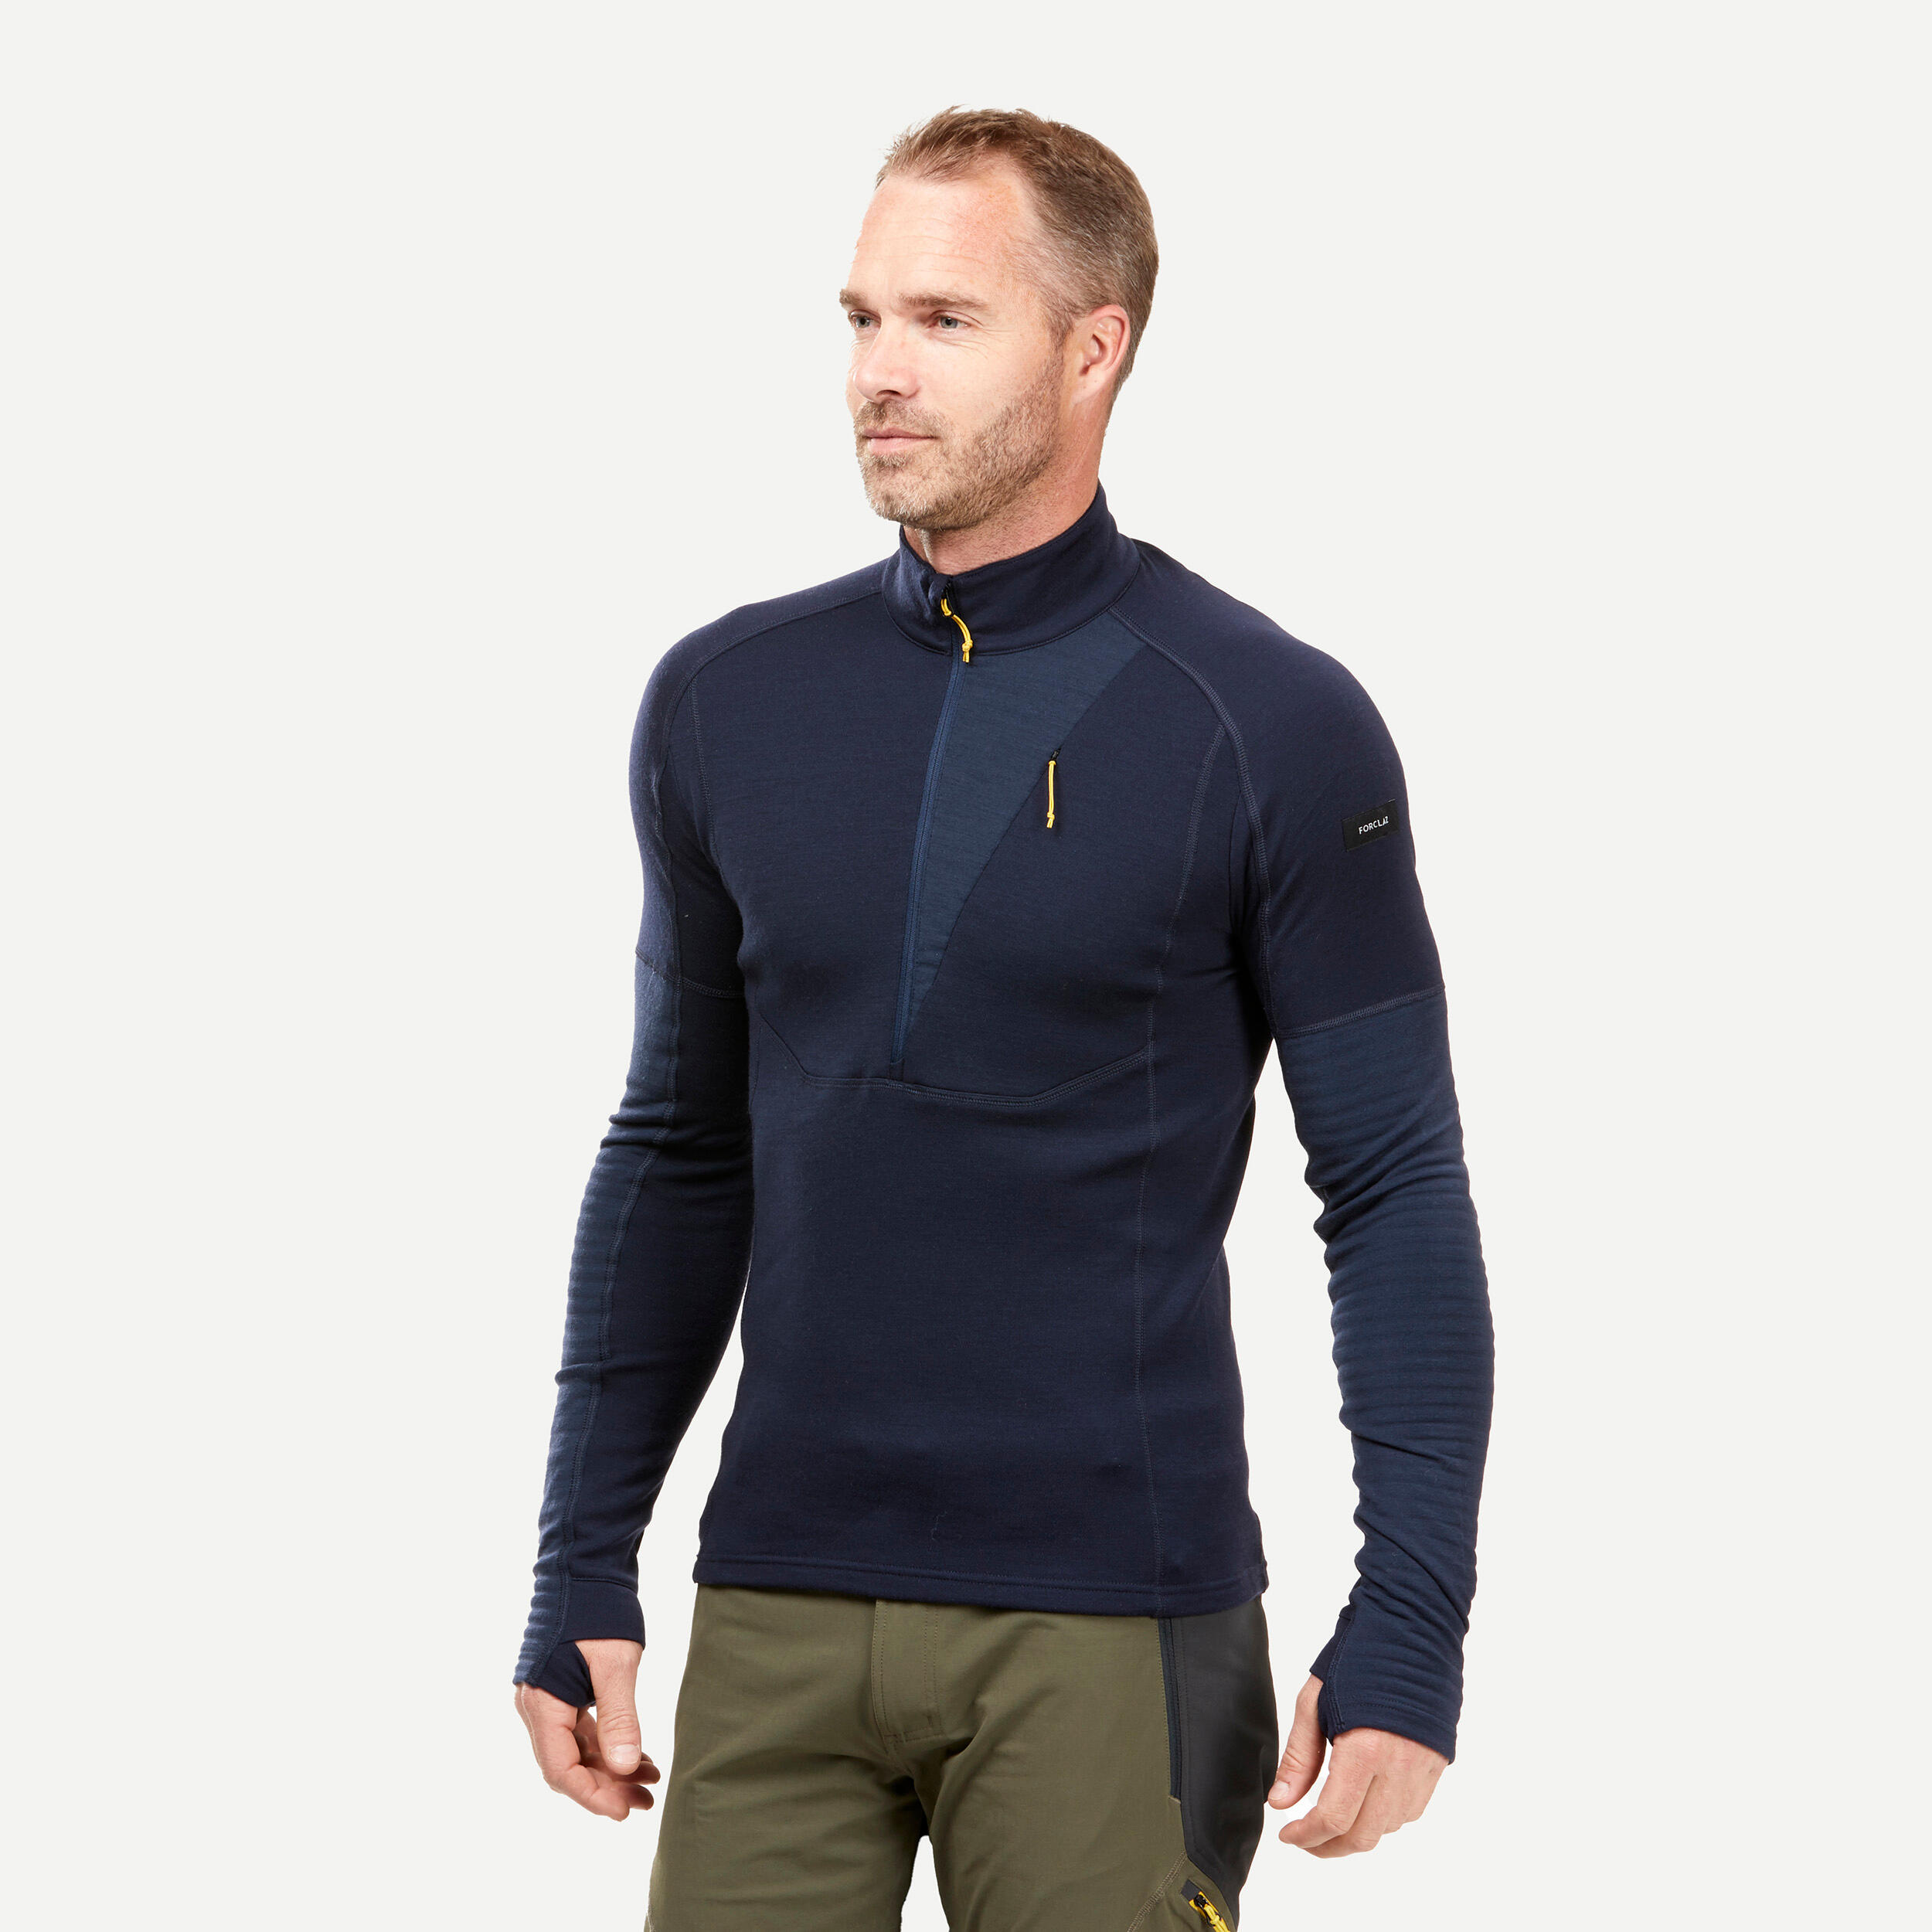 Men’s Merino Wool Hiking Shirt - MT 900 - Asphalt blue, Navy blue ...